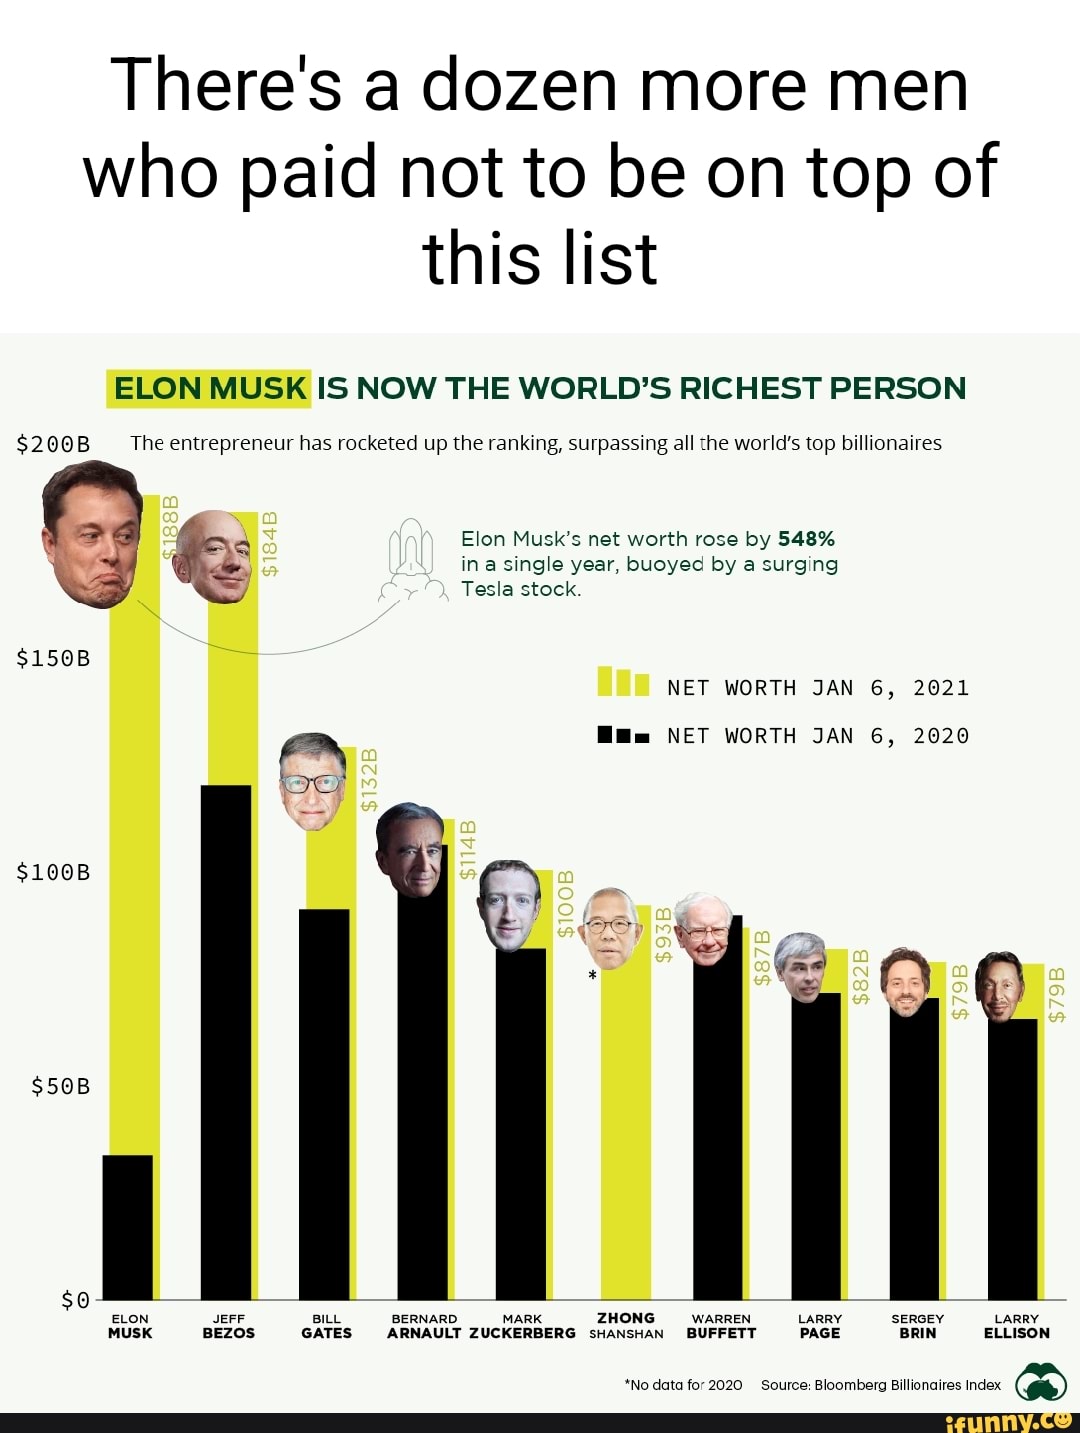 World's richest man Bernard Arnault now worth $200B